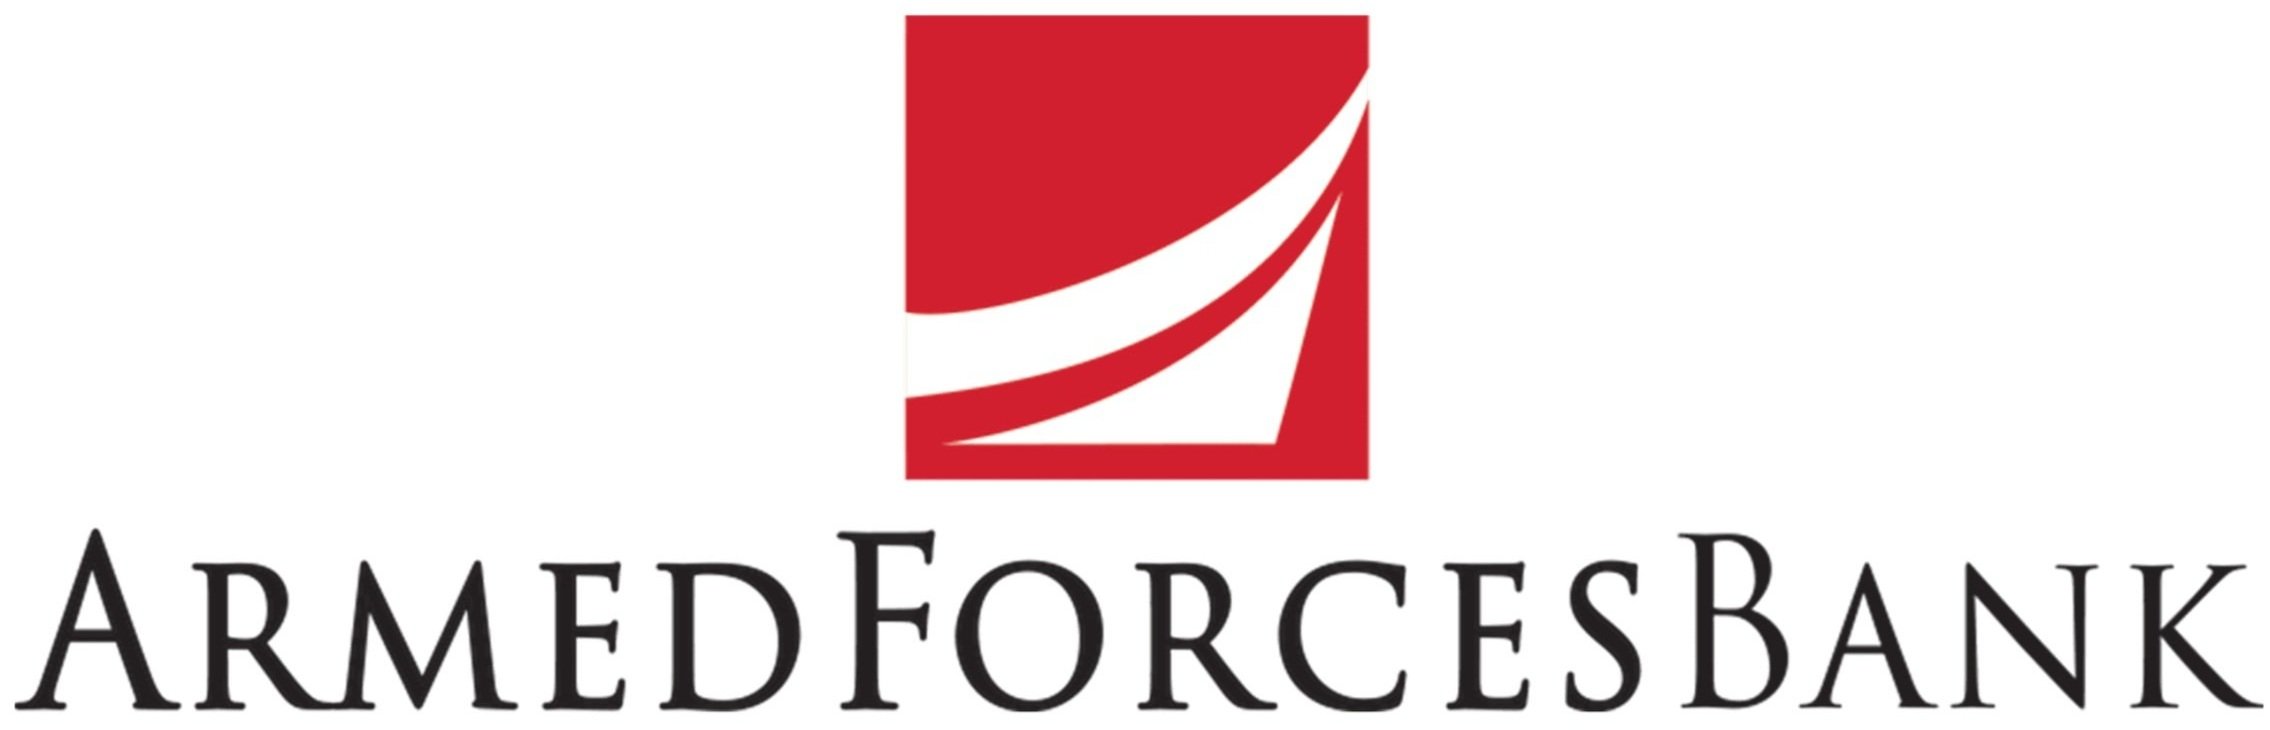 Armed-Forces-Bank-logo.jpg